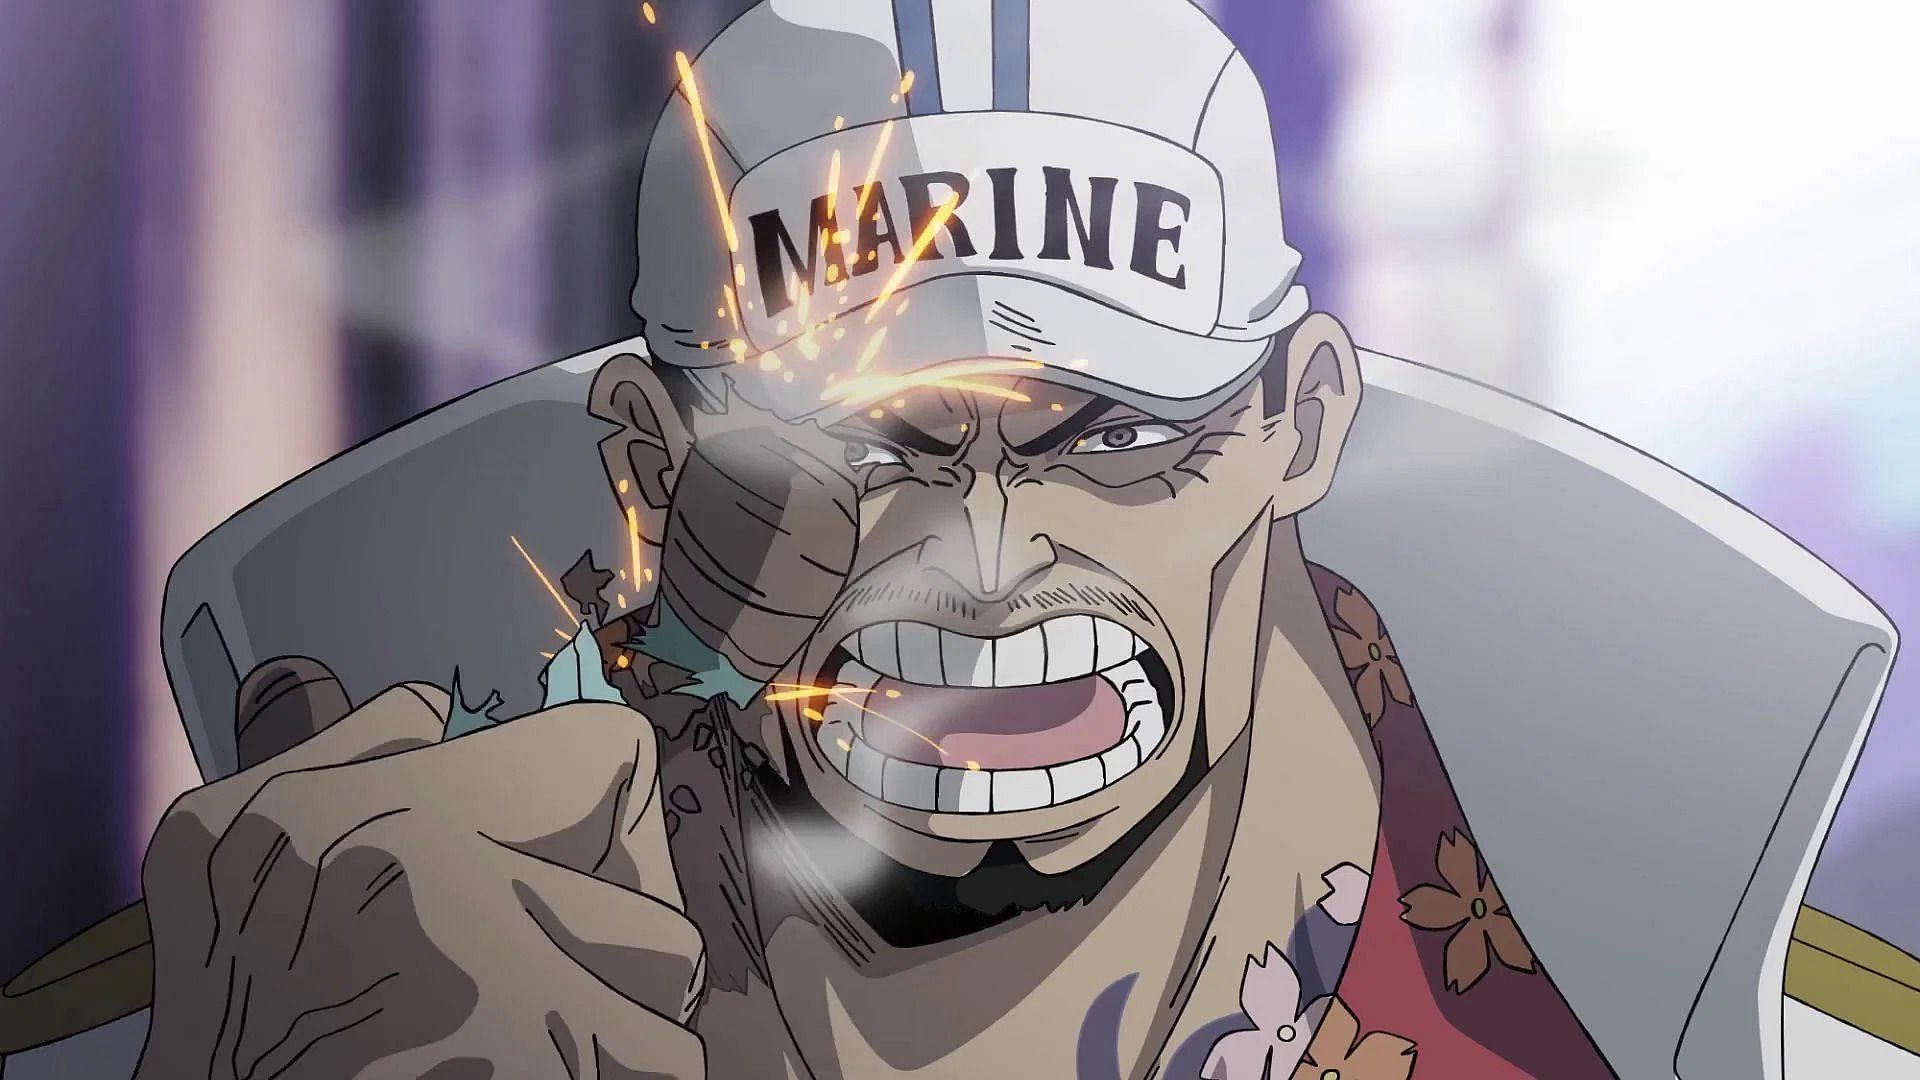 Akainu, Fleet Admiral among the One Piece Marine Ranks (Image via Toei Animation)